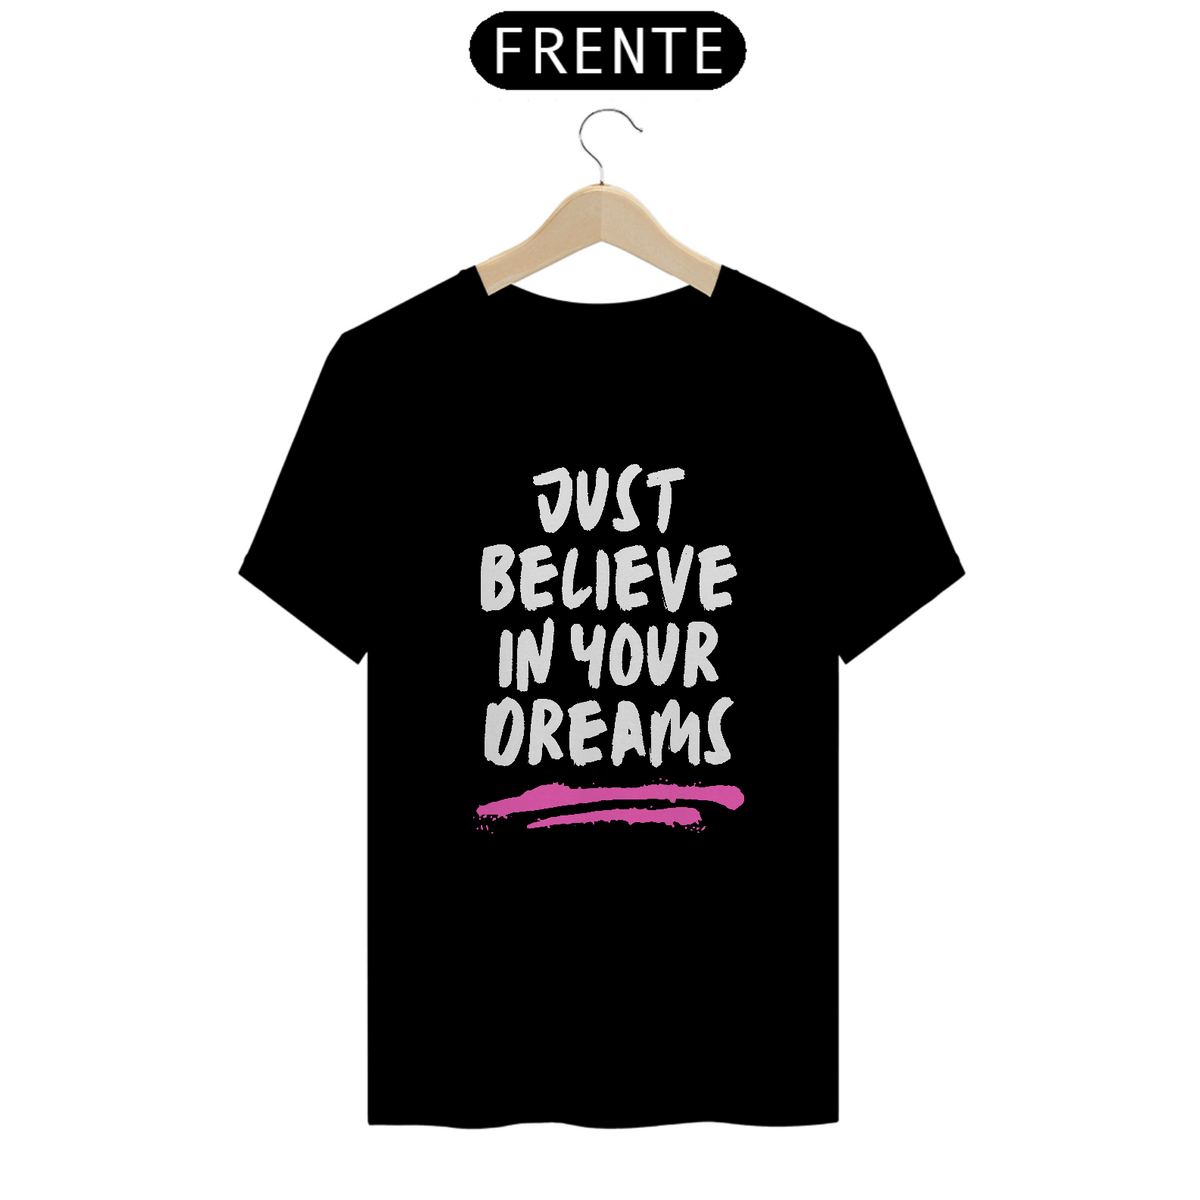 Nome do produto: Camiseta just believe in your dreams